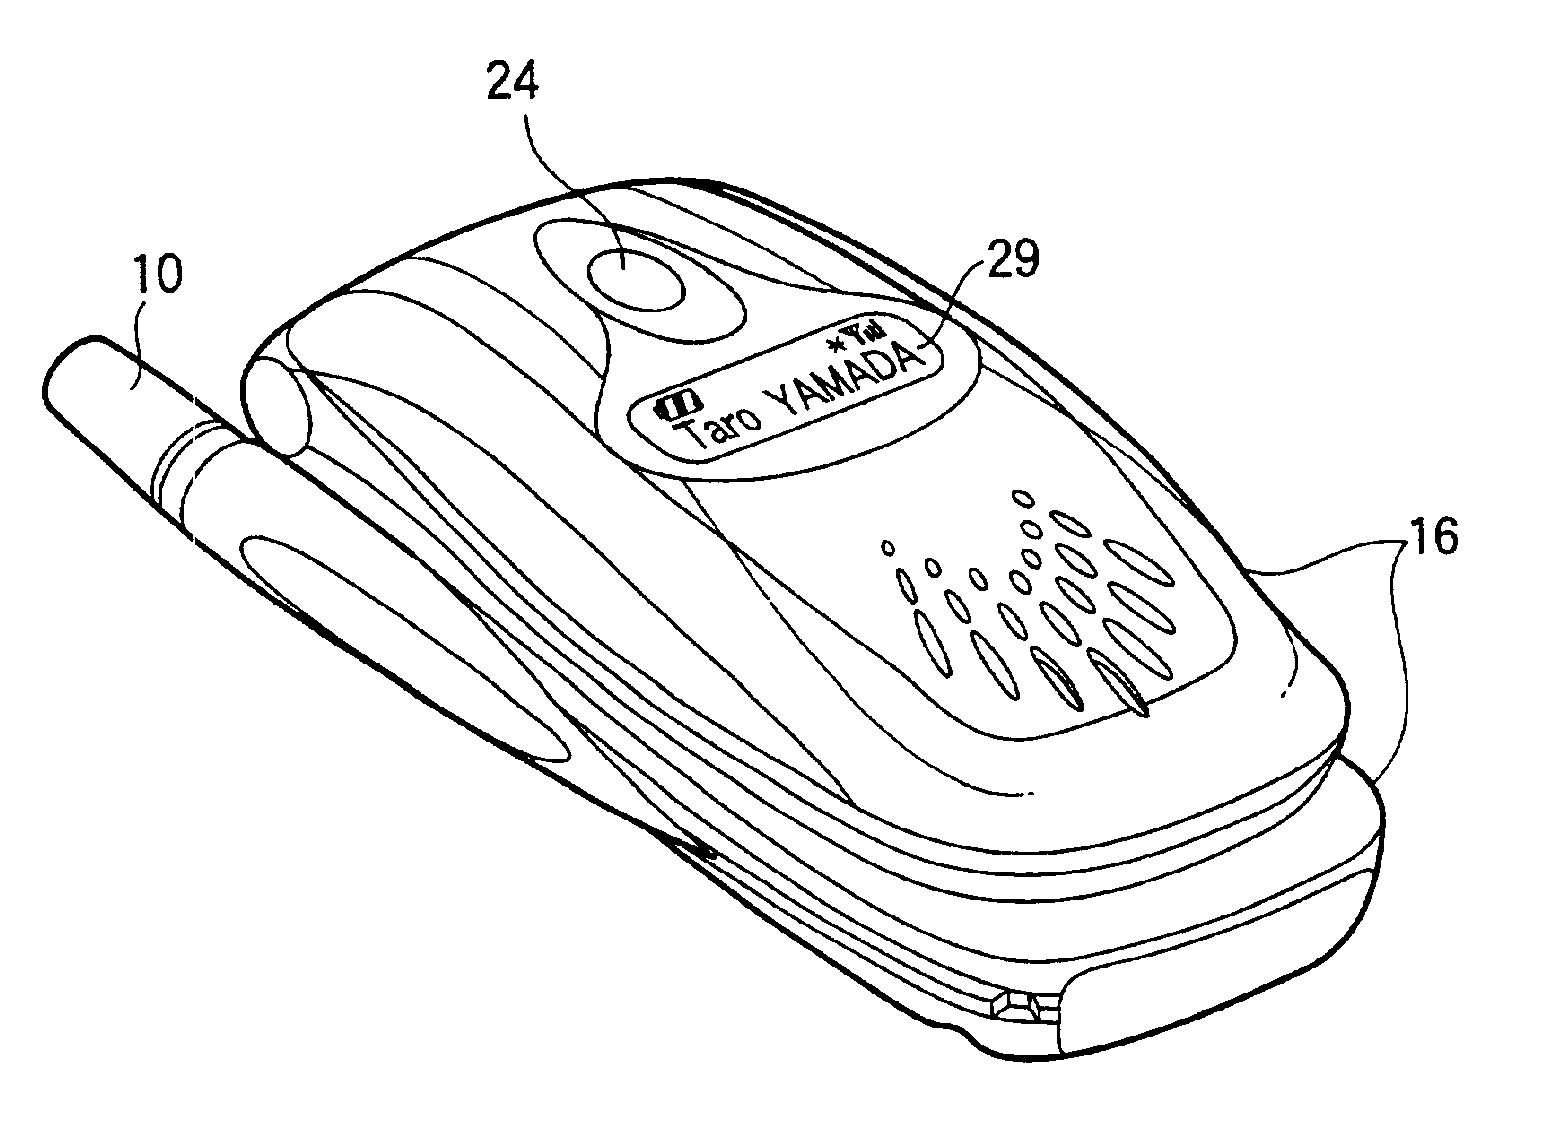 Folding portable radio device